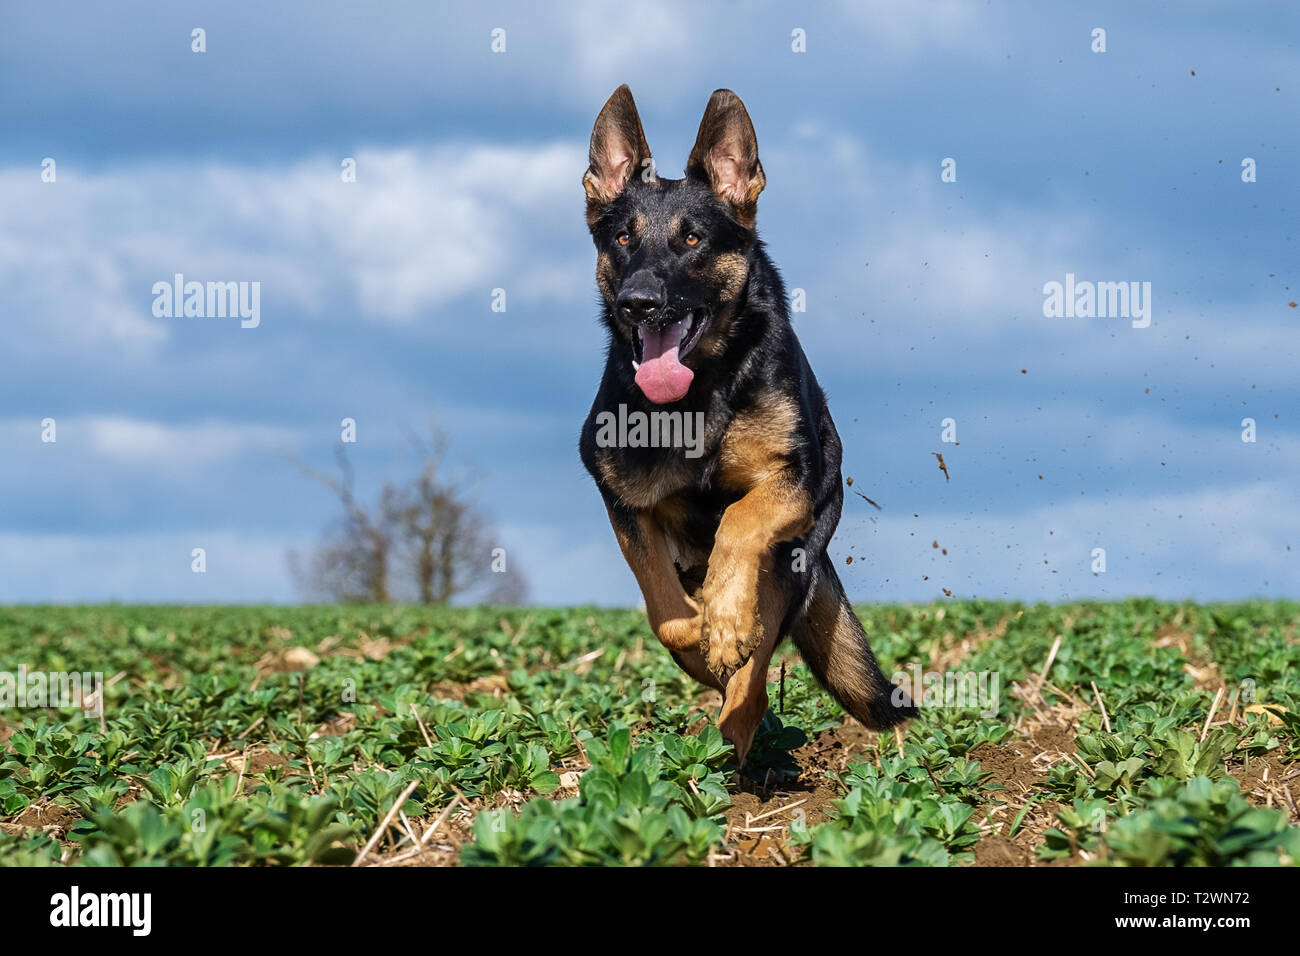 Dog Portraits and working dog imagery Stock Photo